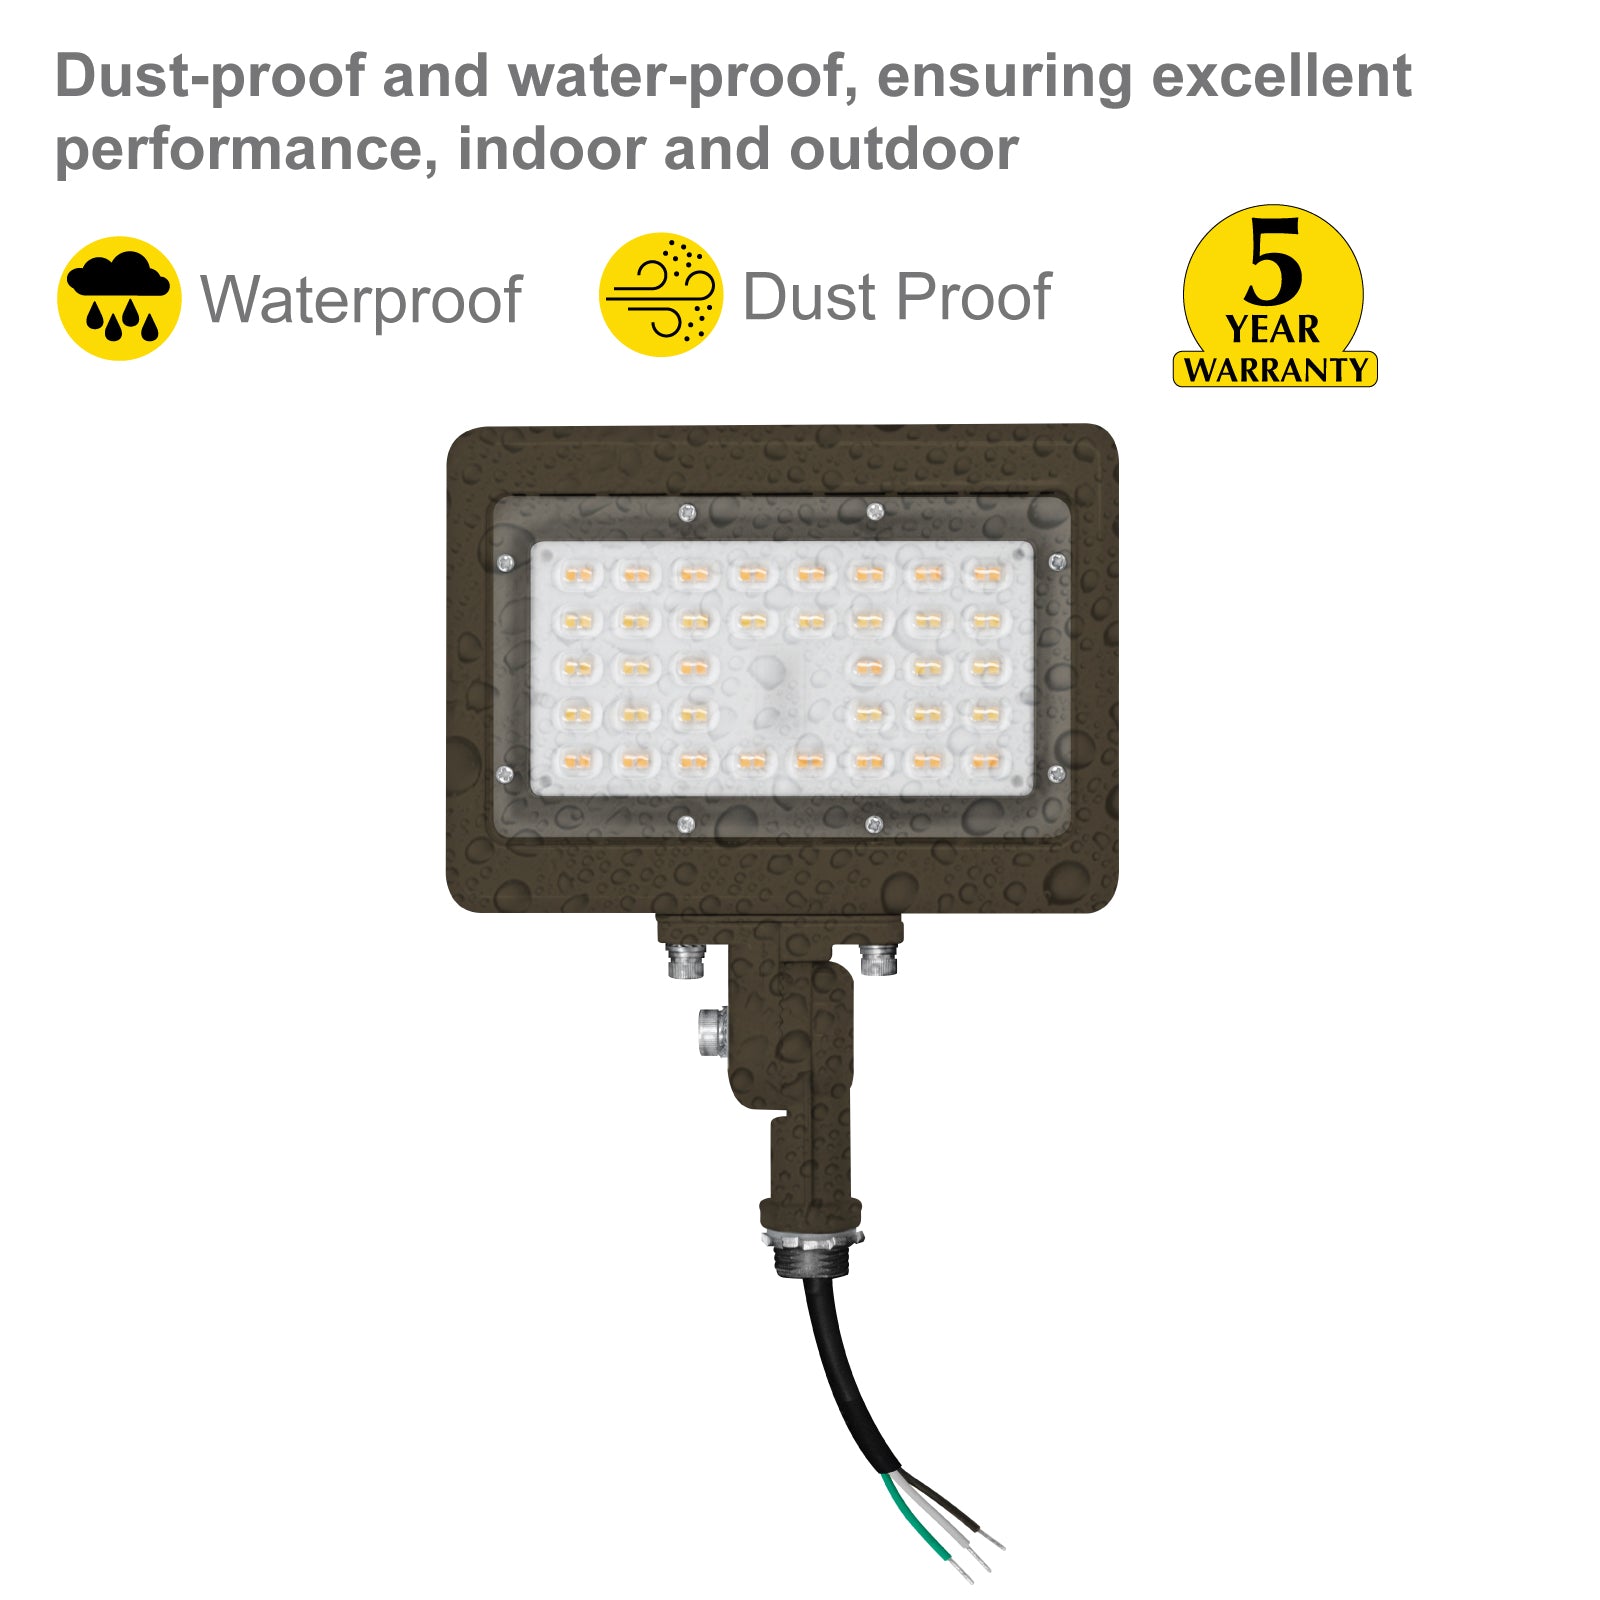 NUWATT LED Flood Light Outdoor - 30W - 3850 Lumens - 3CCT Color Selectable 3000K, 4000K, 5000K - Waterproof LED Flood Light with 1/2